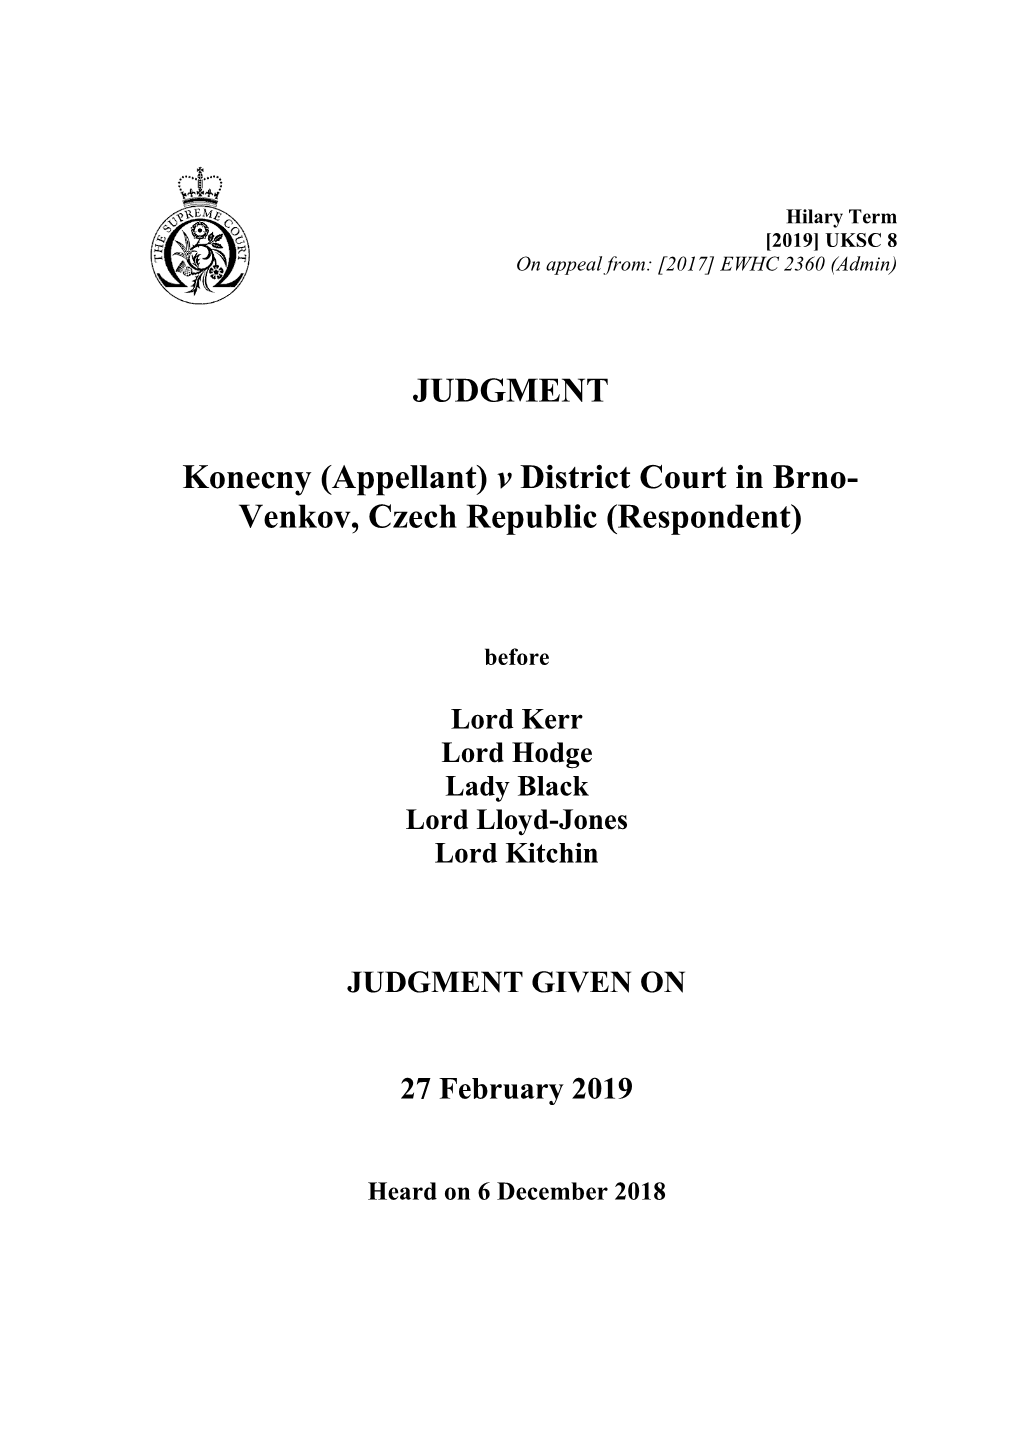 Konecny (Appellant) V District Court in Brno-Venkov, Czech Republic